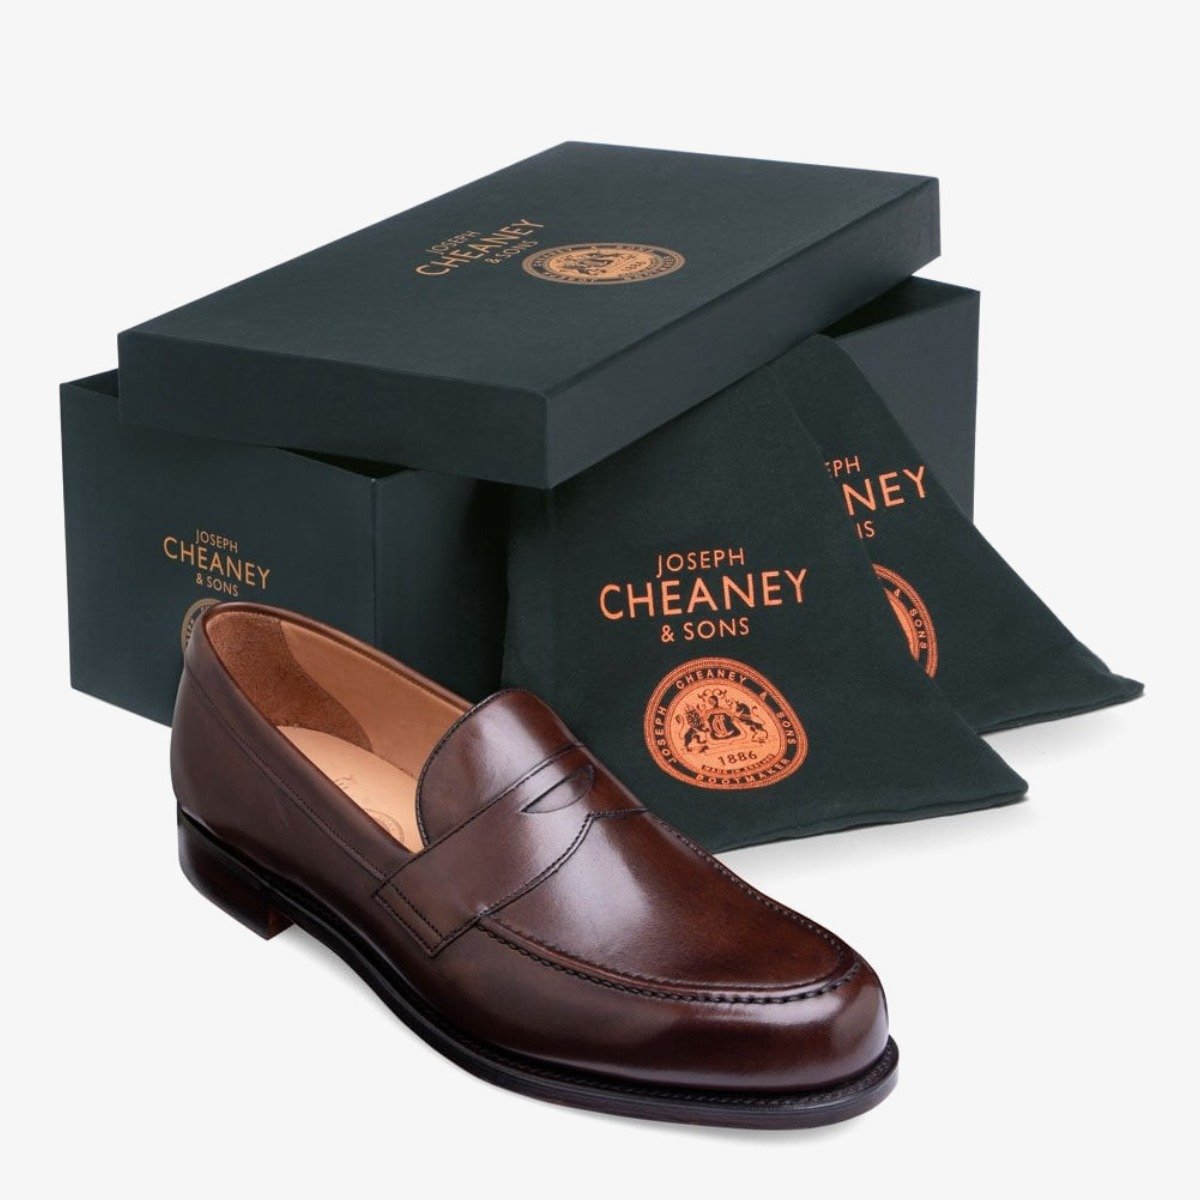 Cheaney Hudson mocha men's penny loafers